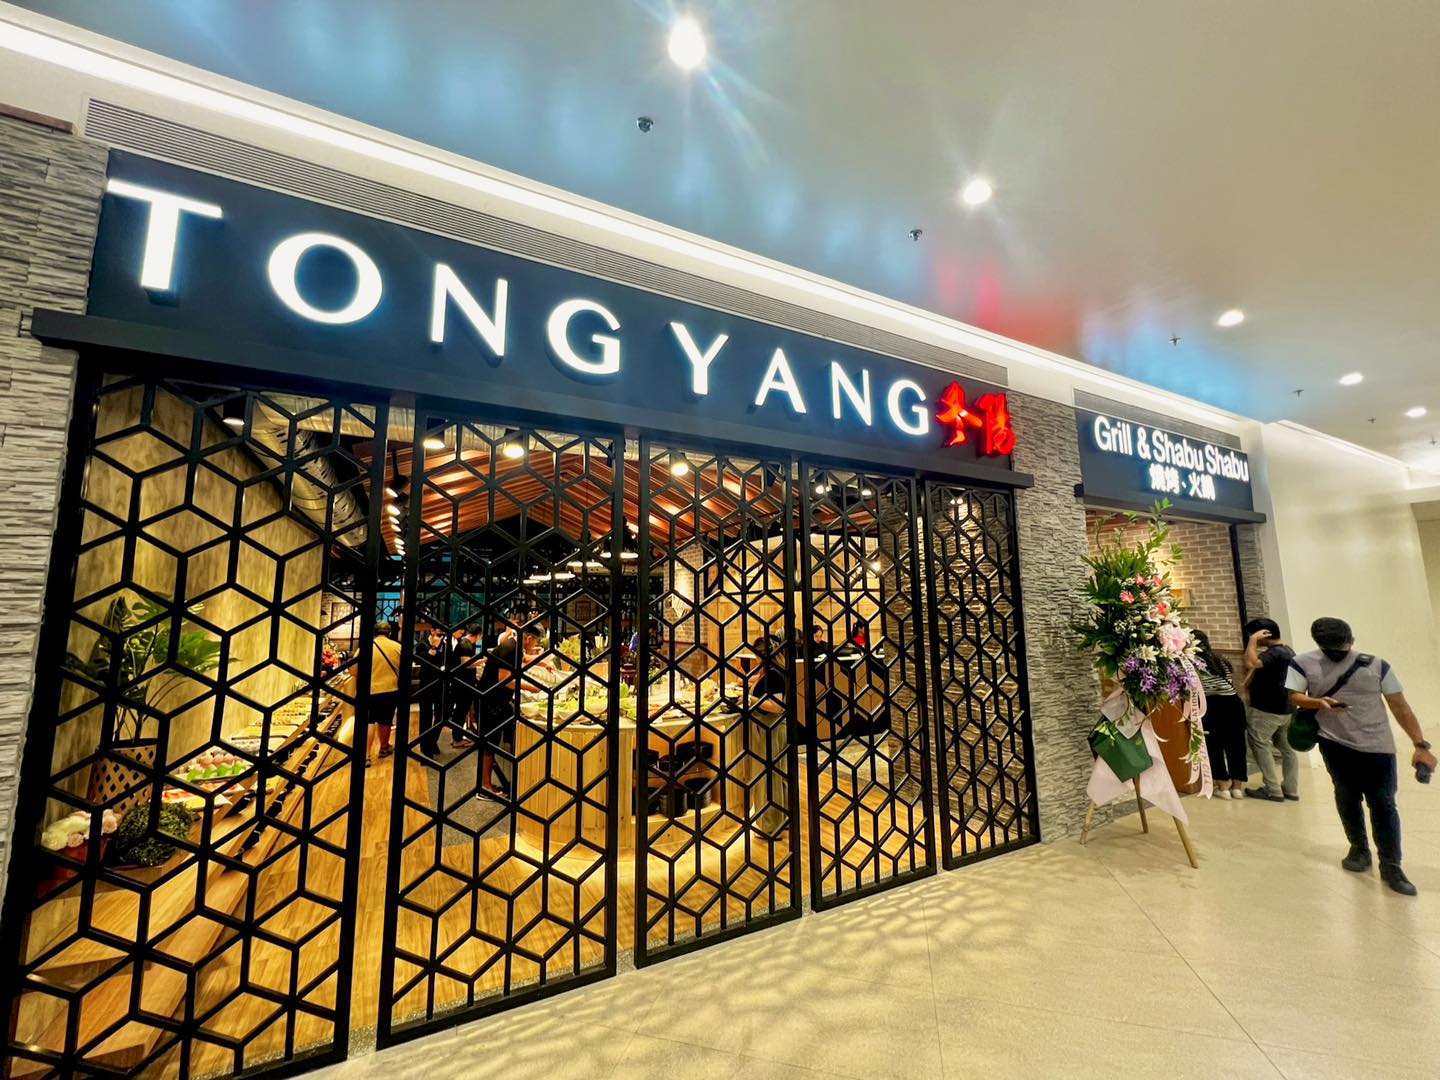 Tong Yang Grill & Shabu-Shabu opens in the New Gateway Mall 2